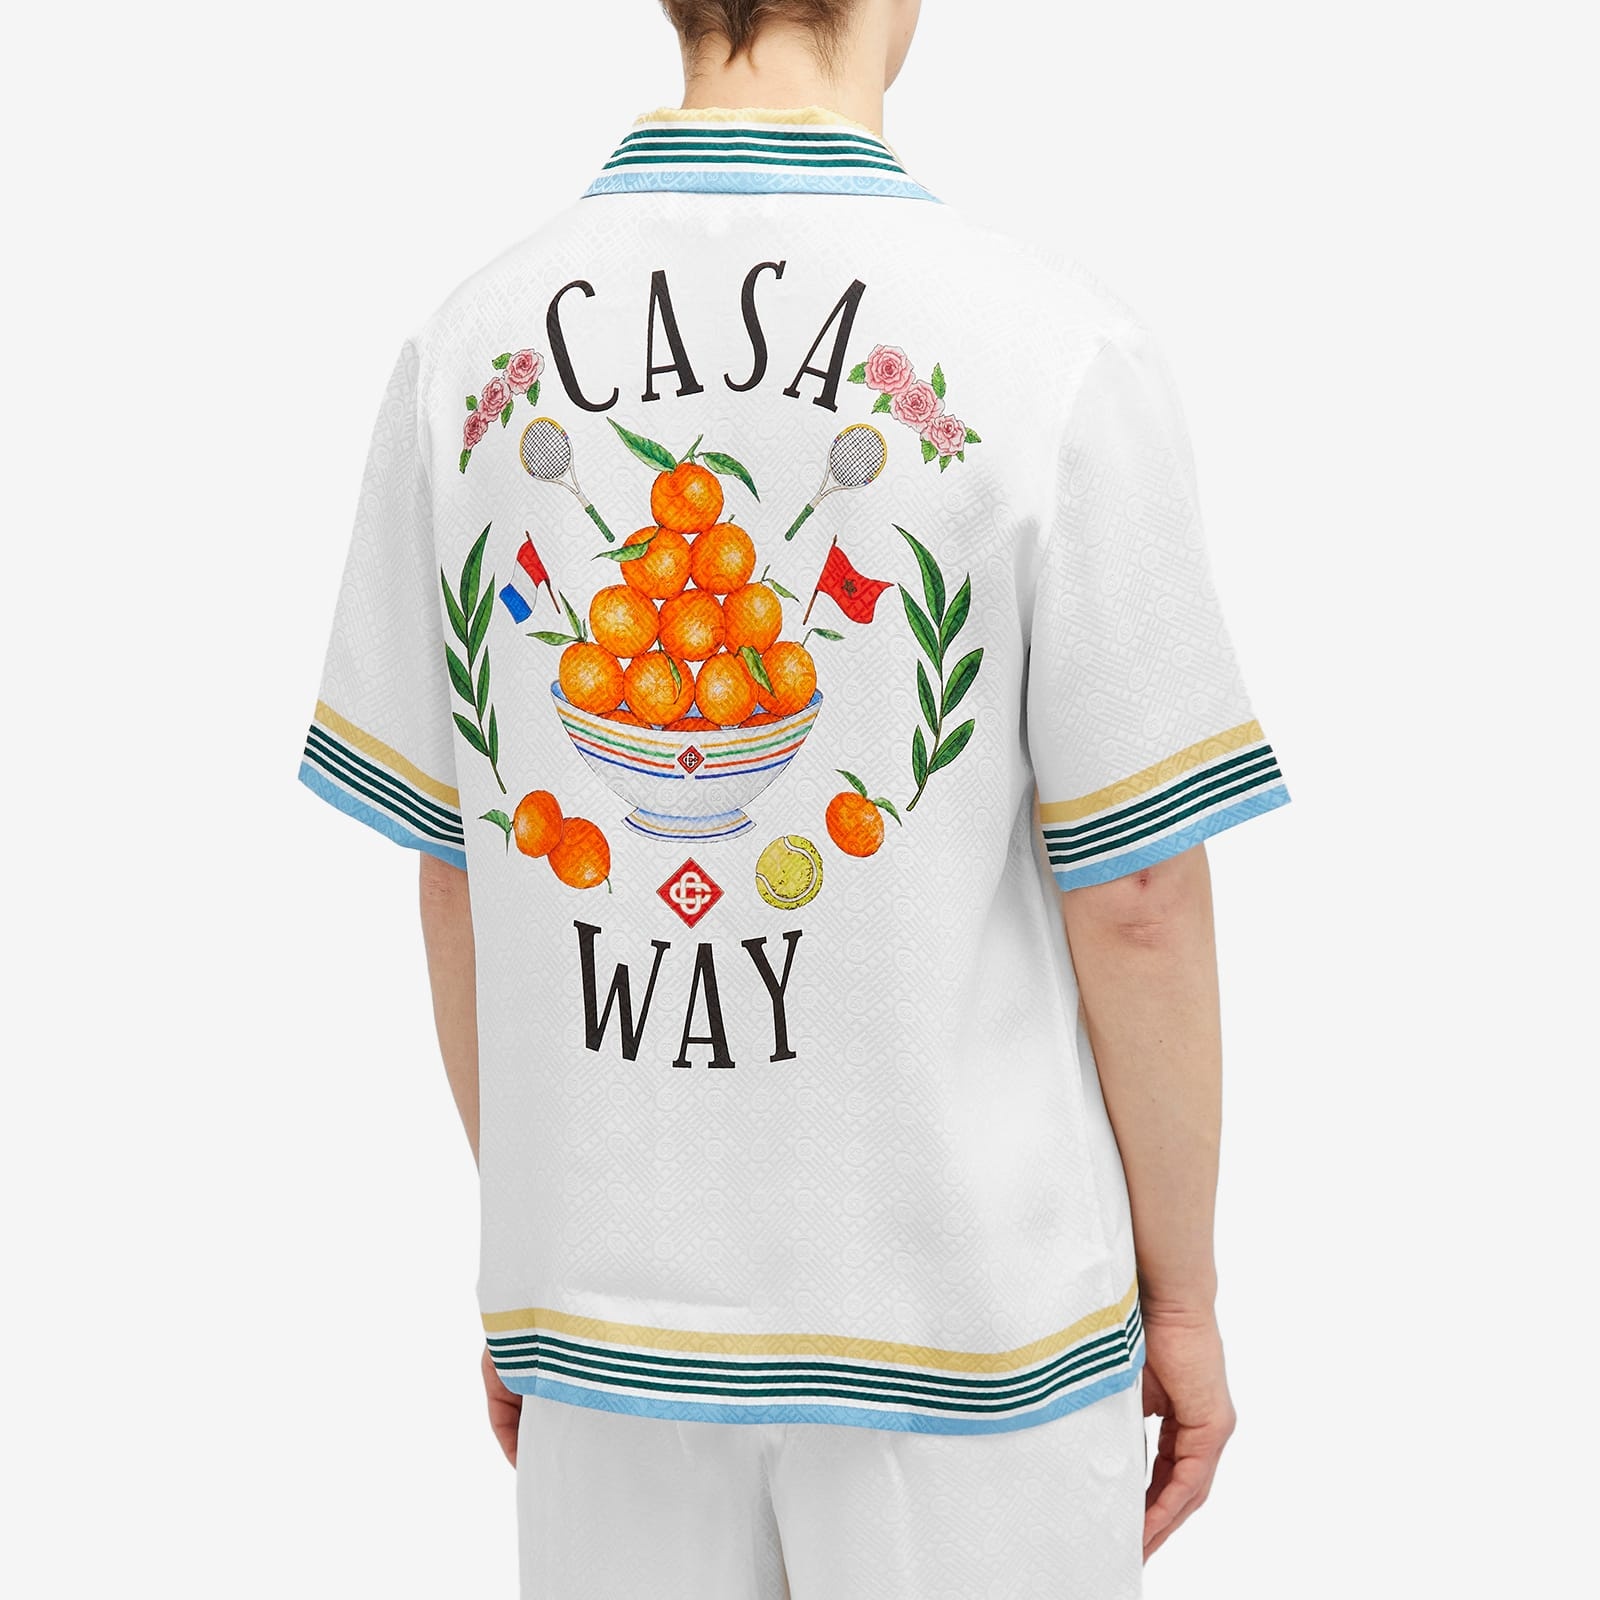 Casablanca Casa Way Short Sleeve Silk Shirt - 3